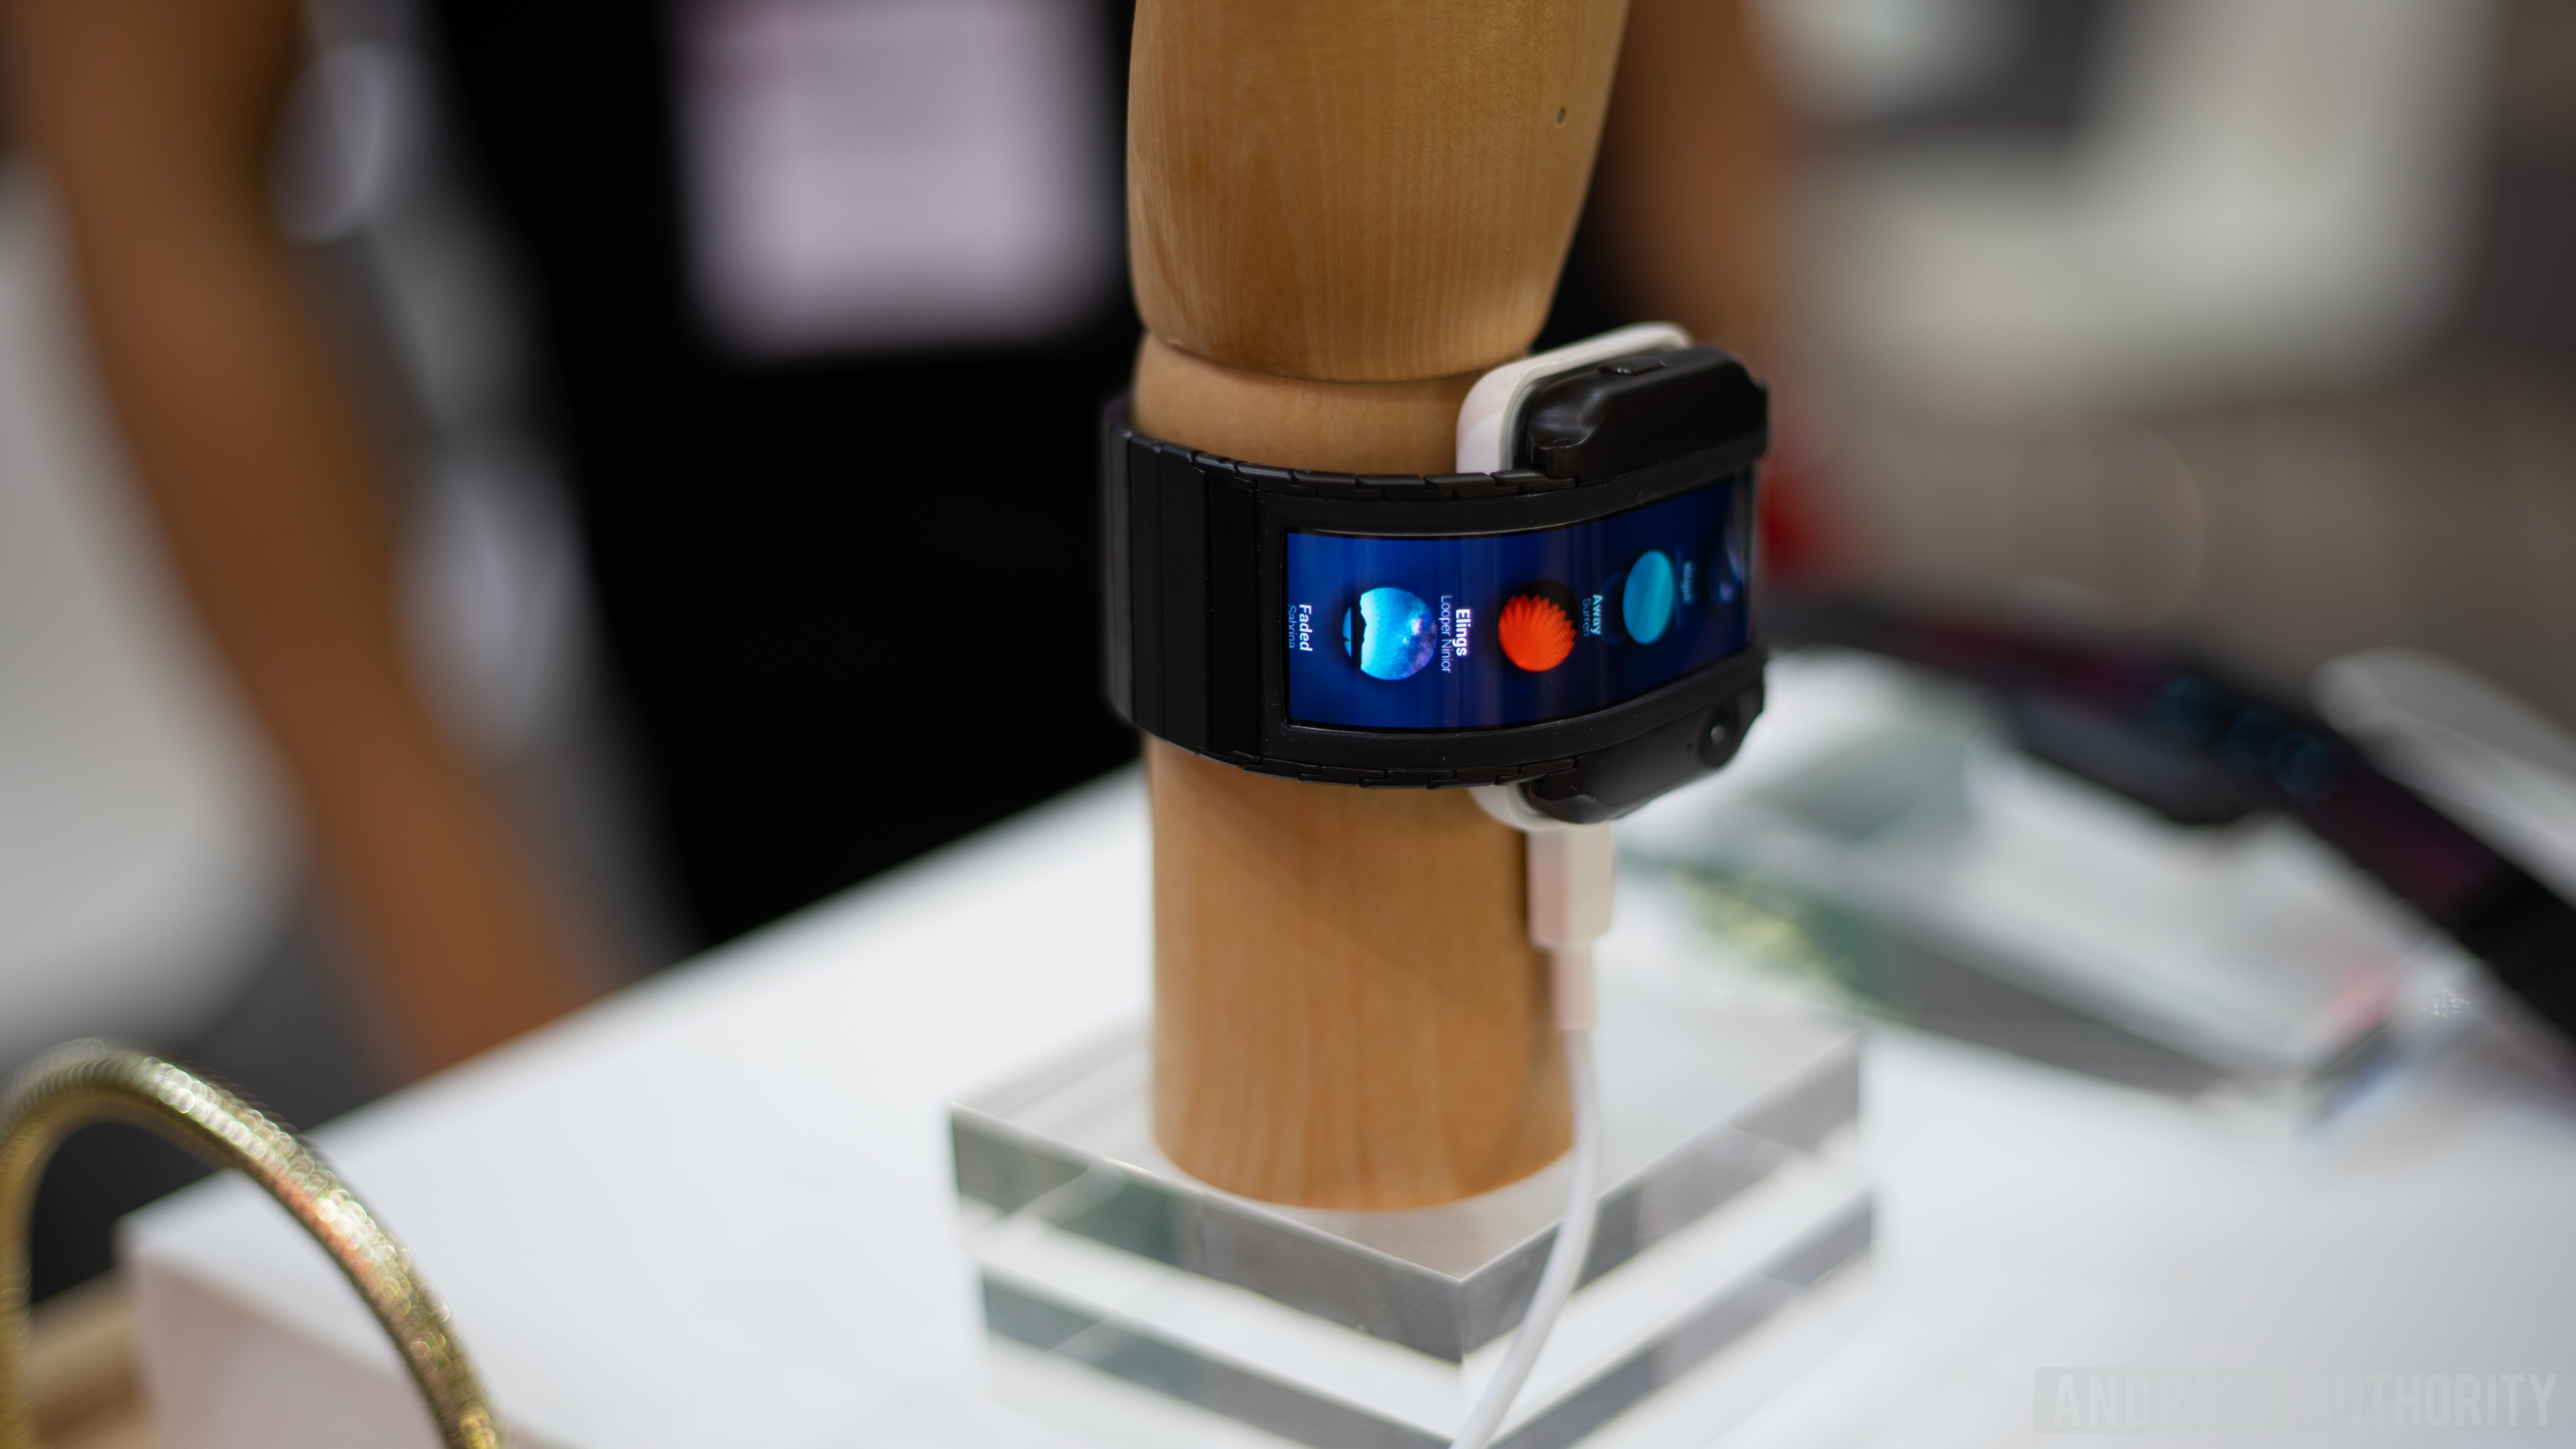 Nubia Alpha smartwatch shown at IFA 2018